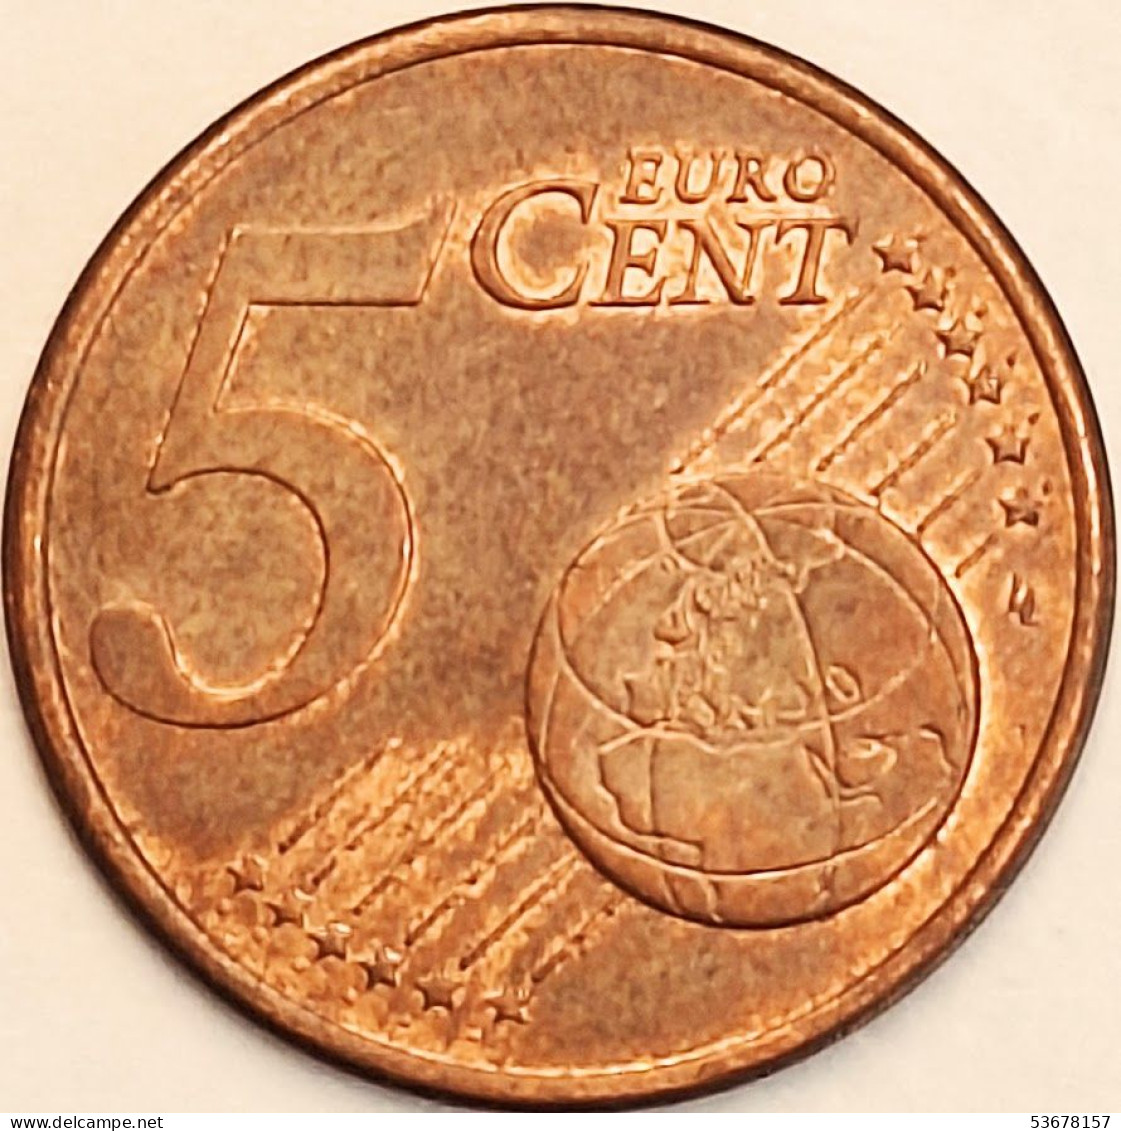 France - 5 Euro Cent 2008, KM# 1284 (#4384) - France